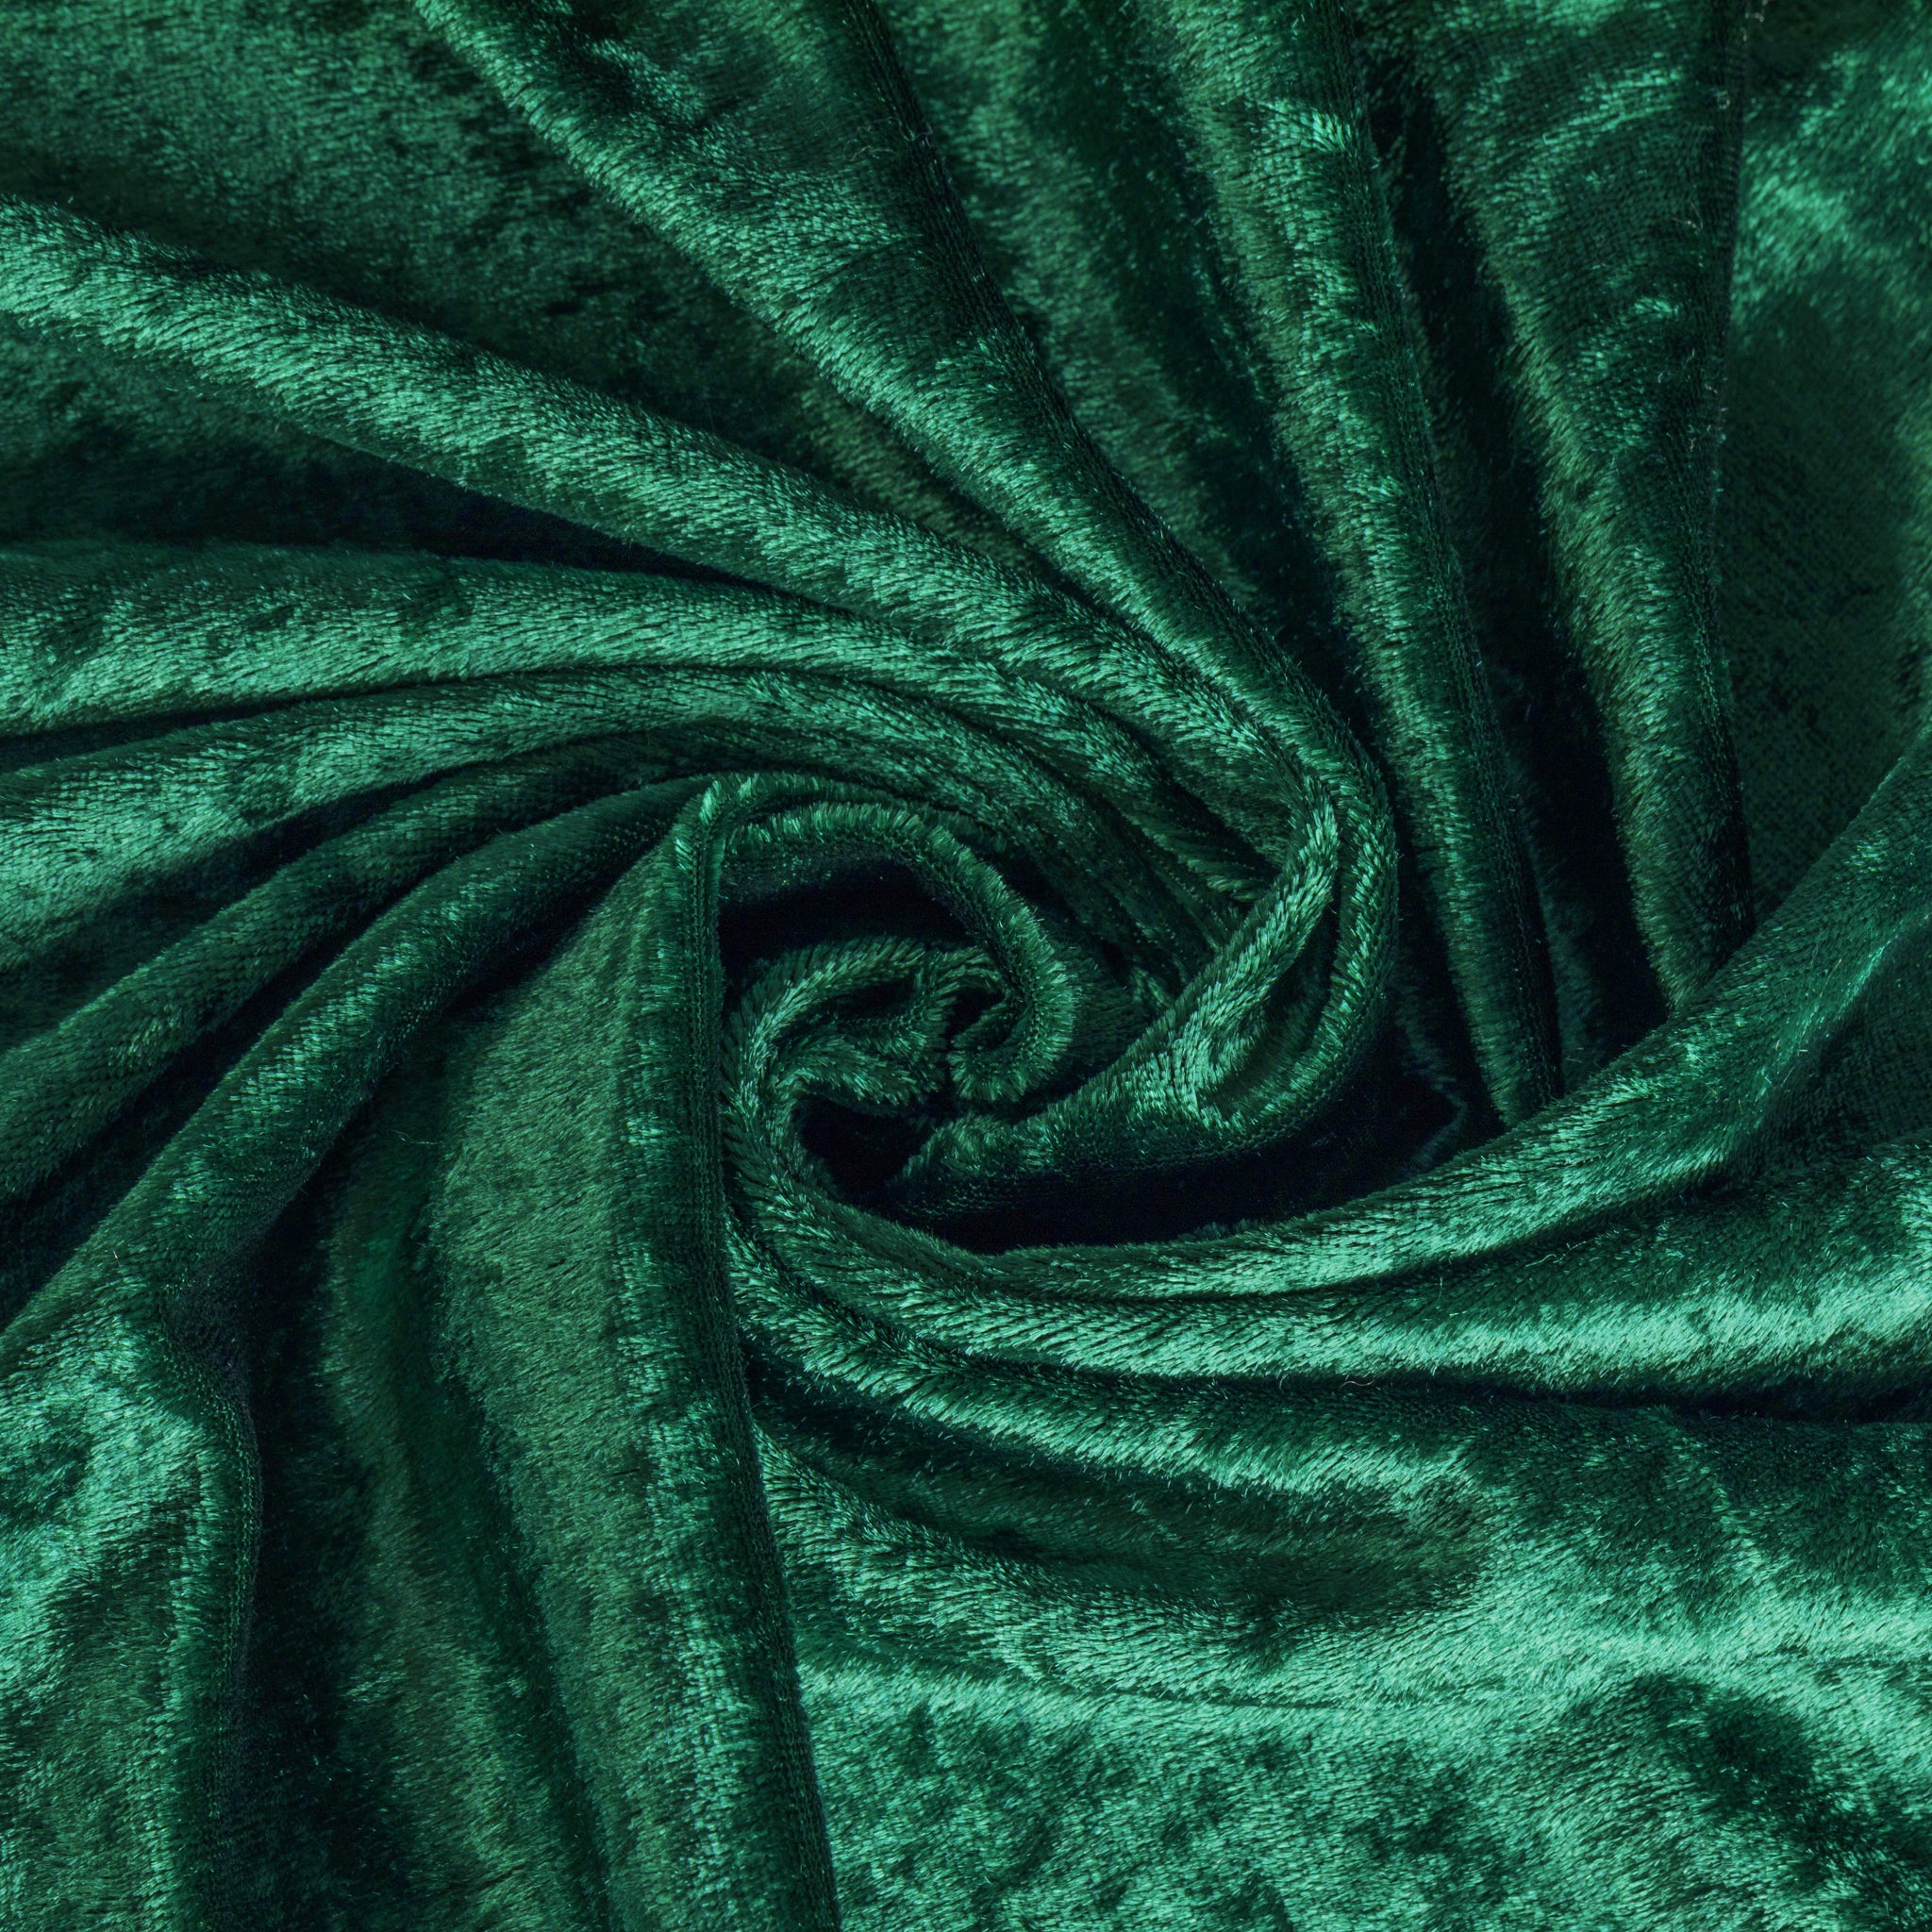 CV Linens 10 Yards Velvet Fabric Roll - Emerald Green